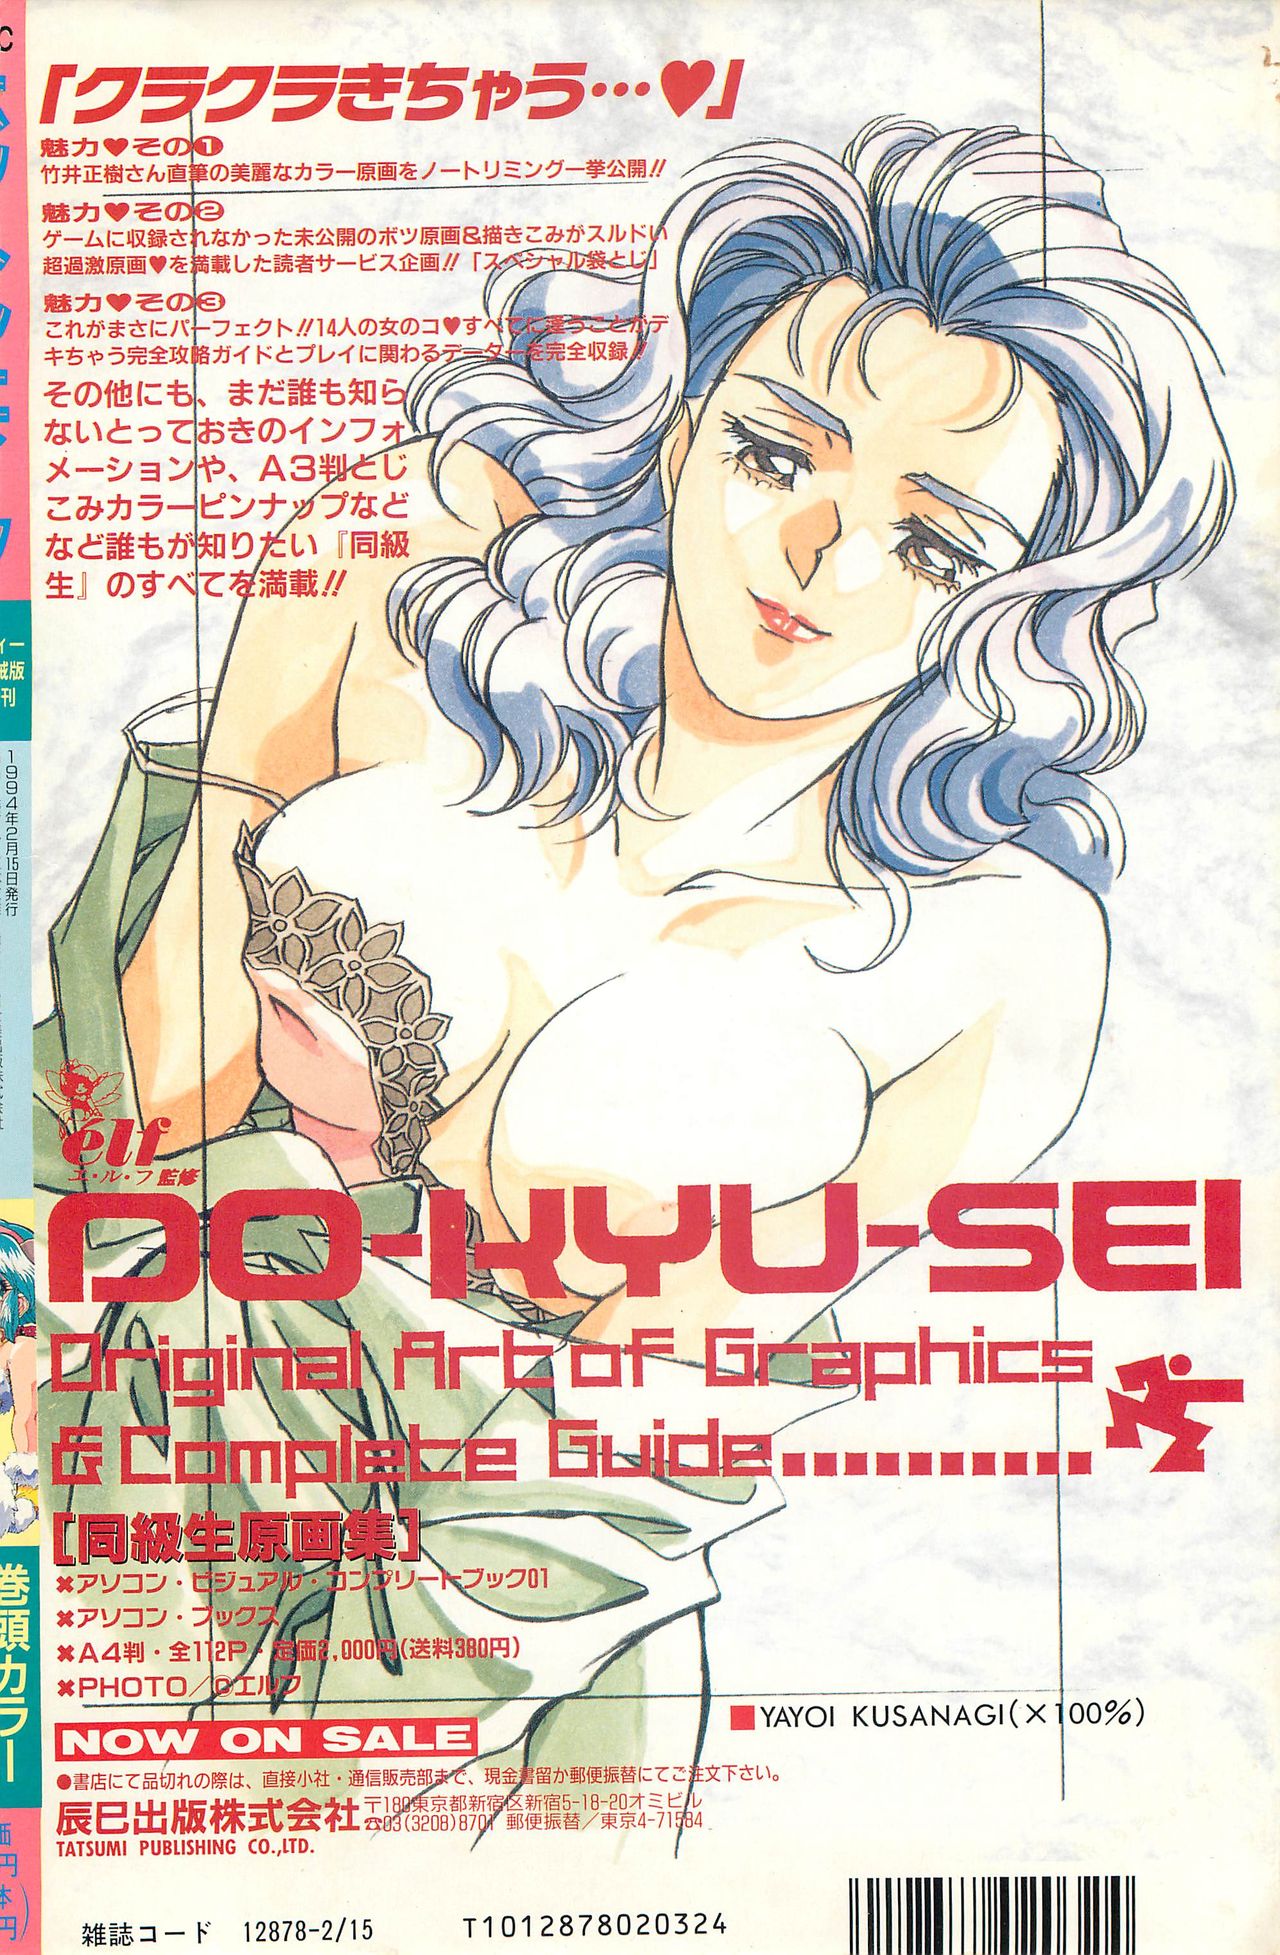 COMIC ホットシェイク キャンディータイム海賊版 1994年2月号増刊